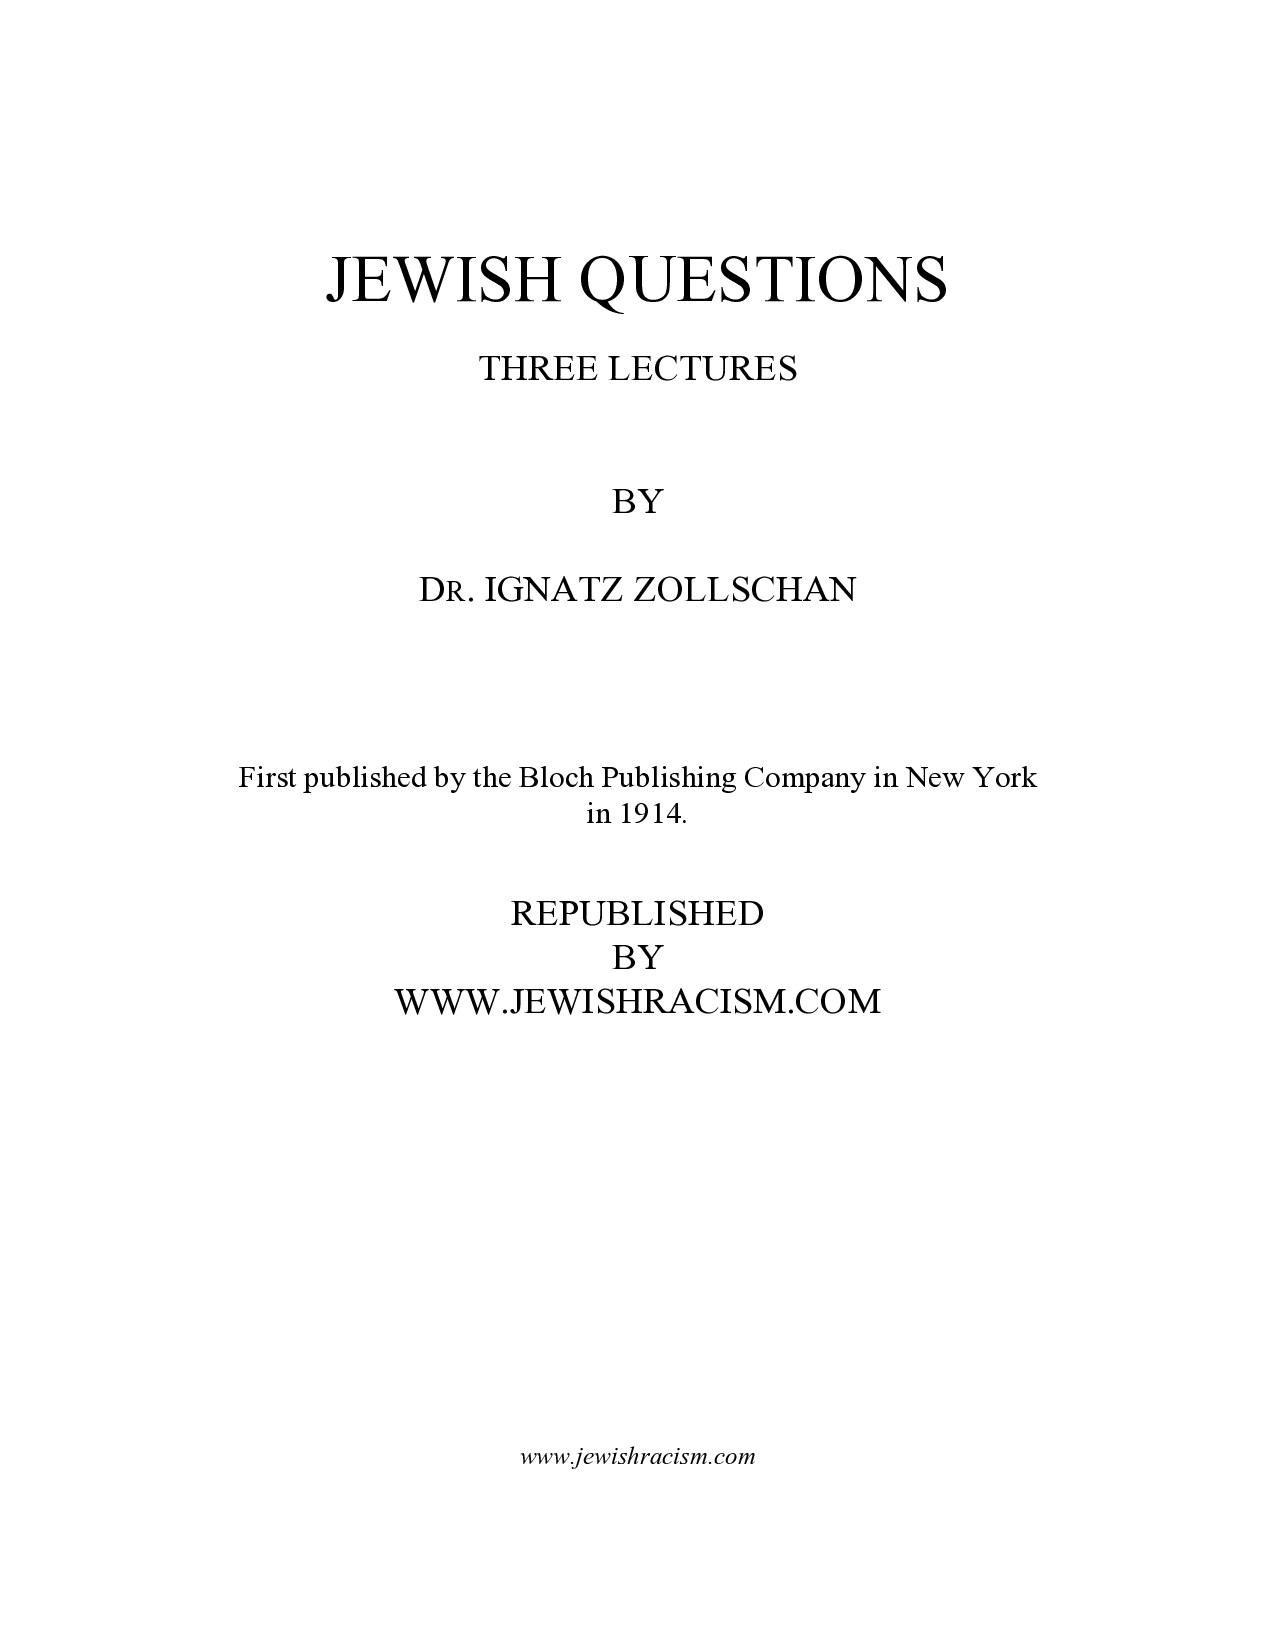 Zollschan, Ignatz; Jewish Questions - Three Lectures